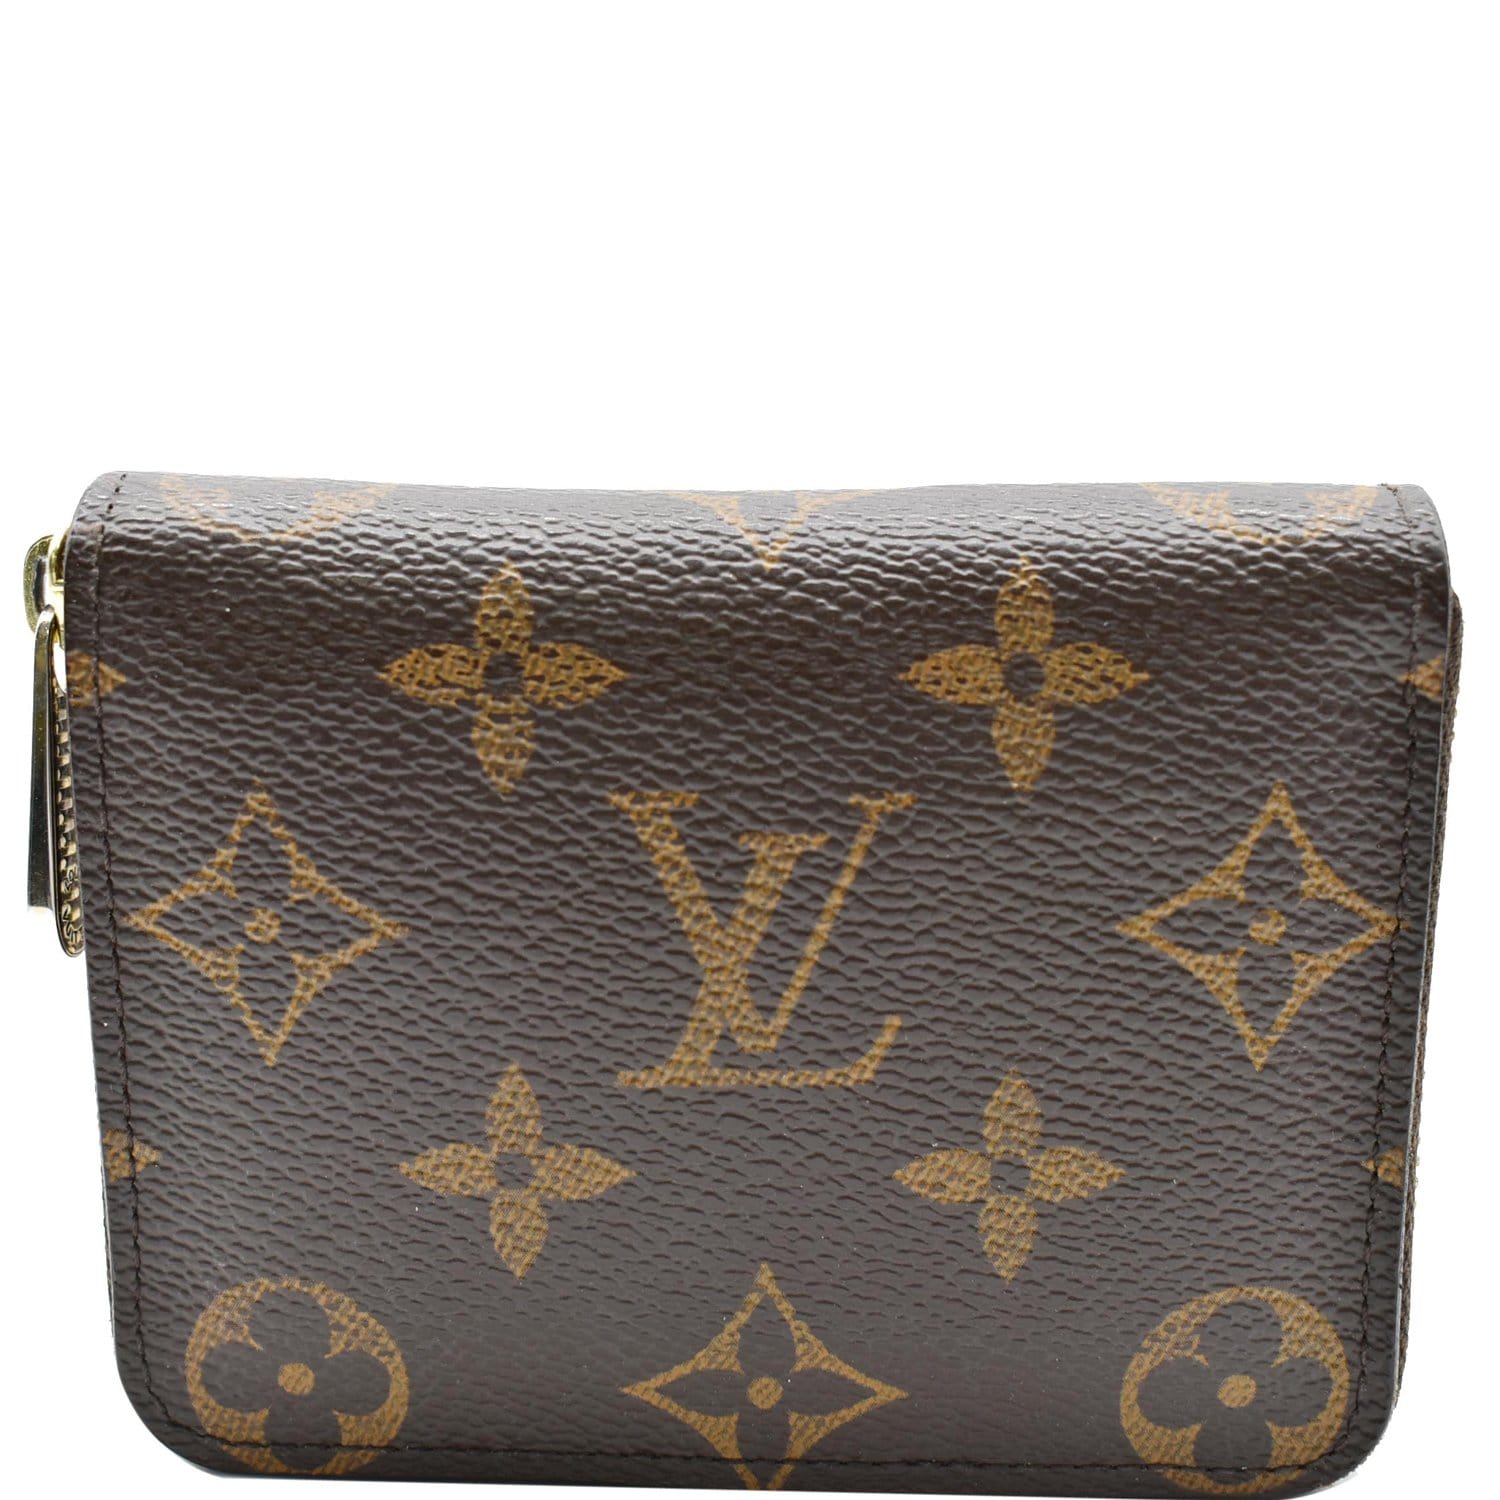 lv change purse with zipper